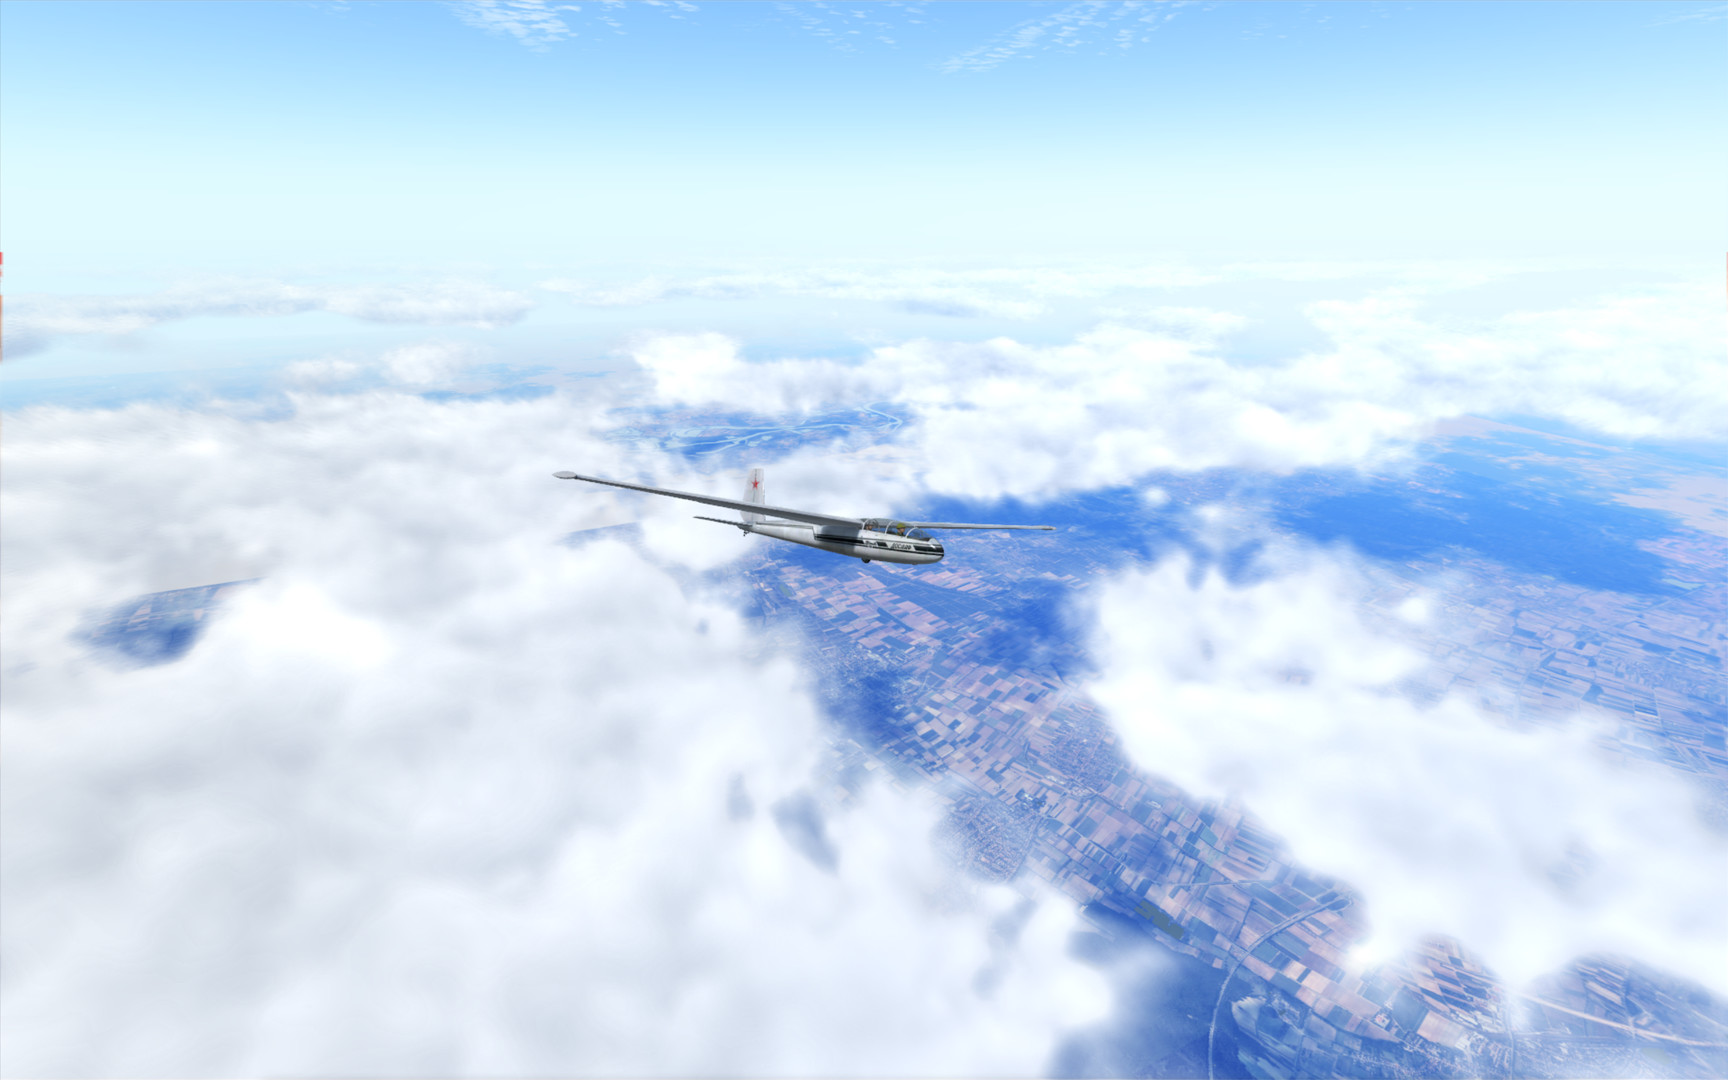 World of Aircraft: Glider Simulator Resimleri 